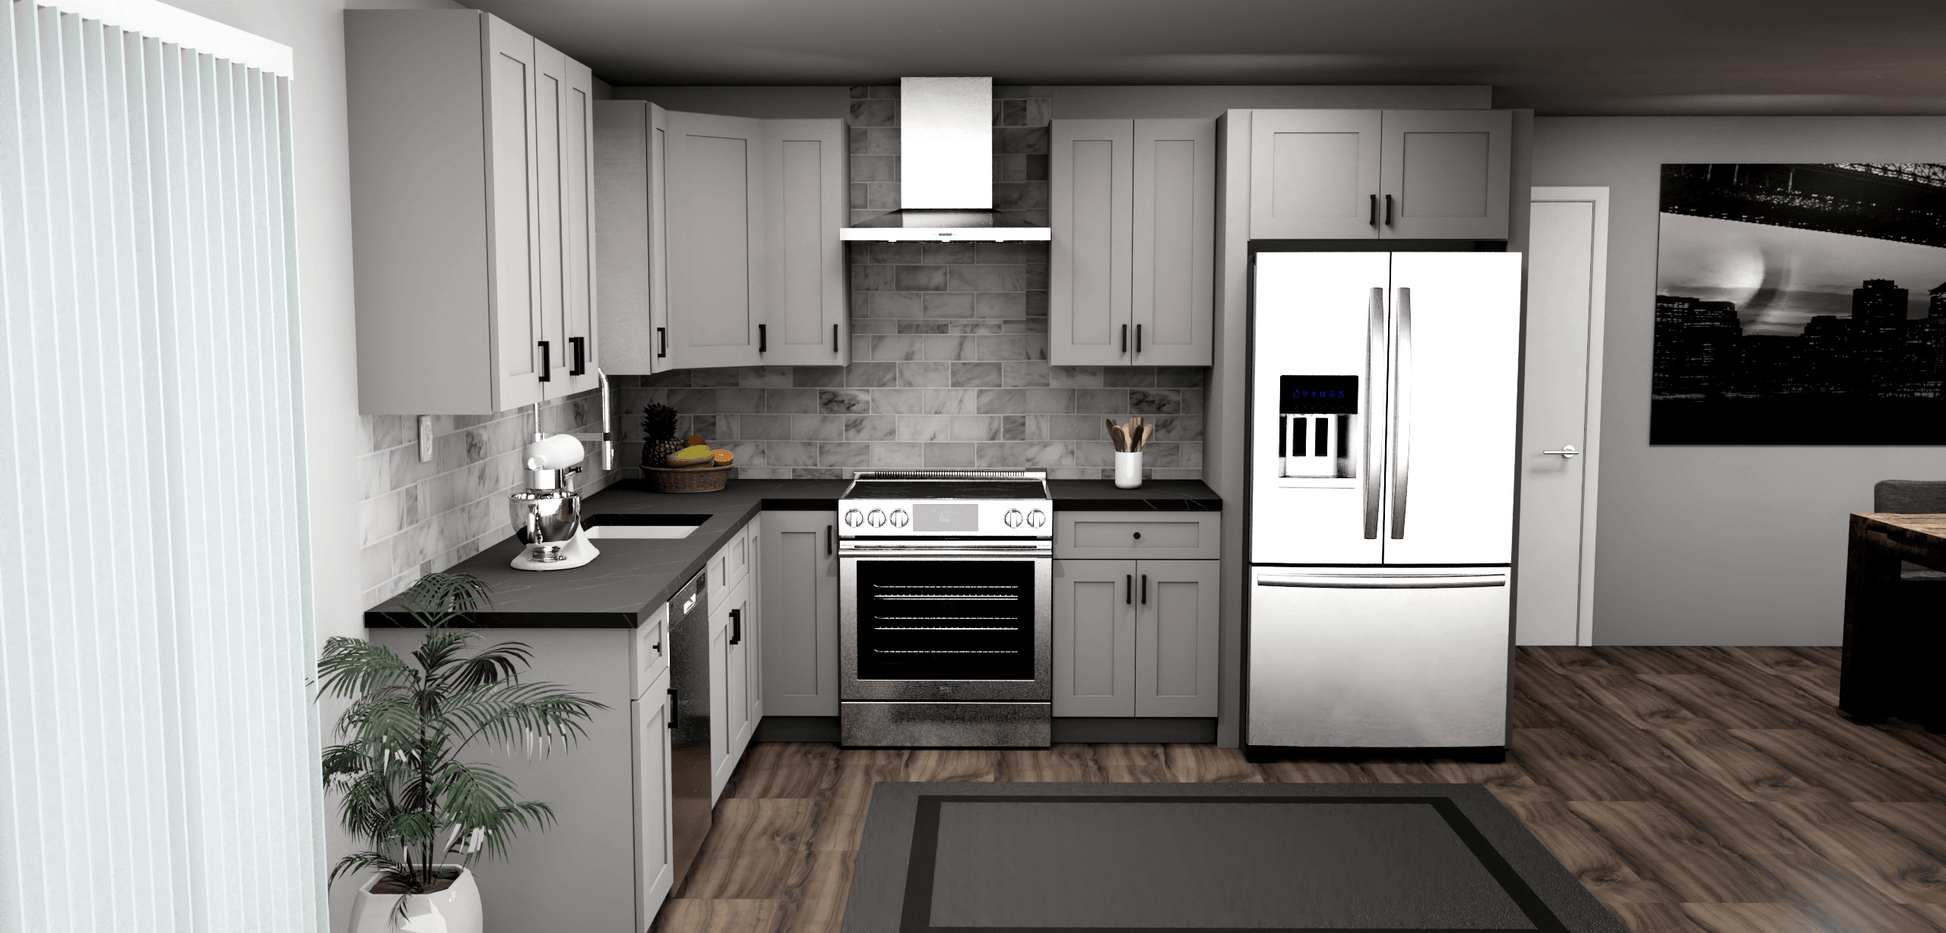 Fabuwood Allure Galaxy Nickel 9 x 11 L Shaped Kitchen Front Layout Photo